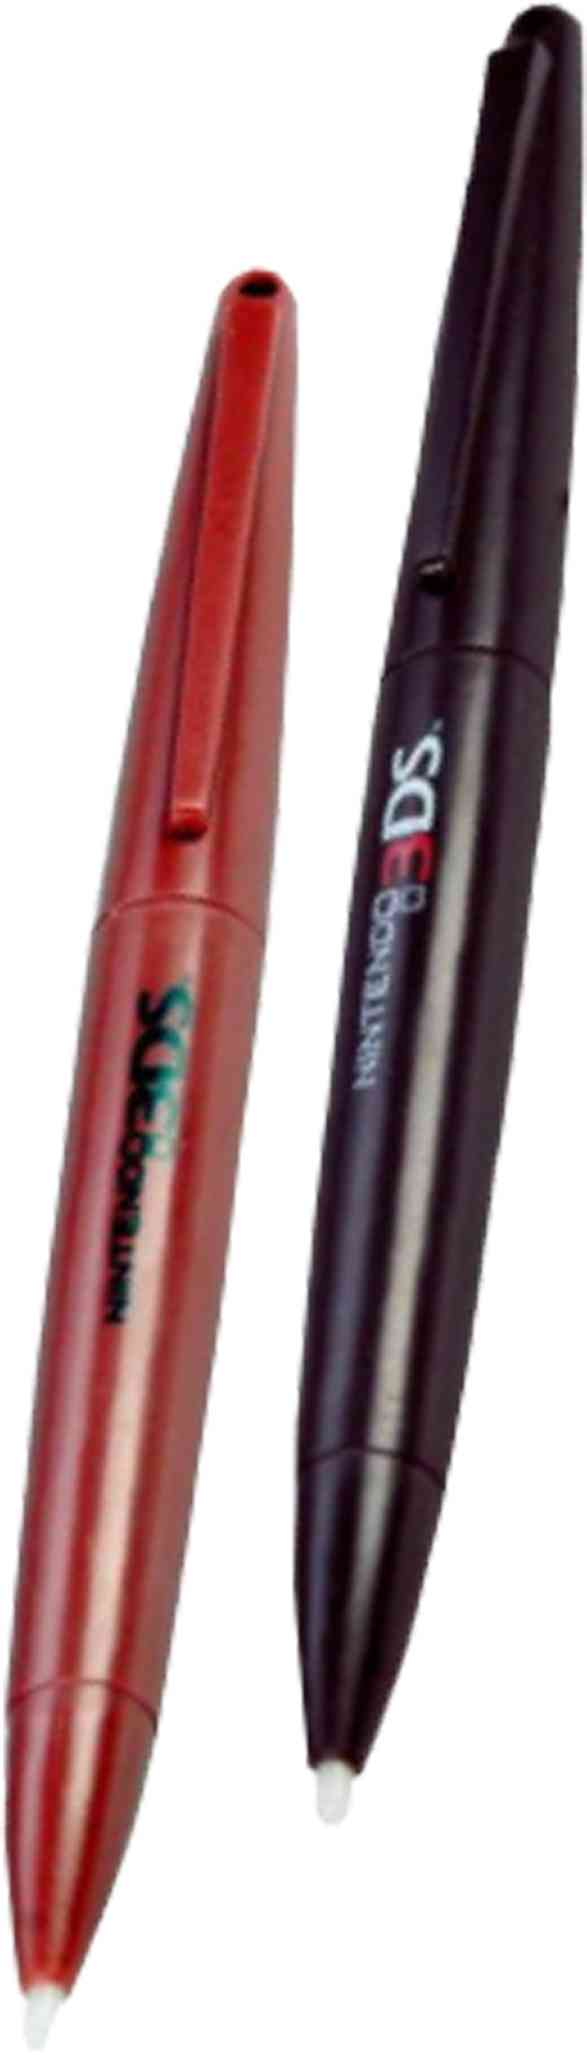 Stylus Kit  Pen Shape  3ds